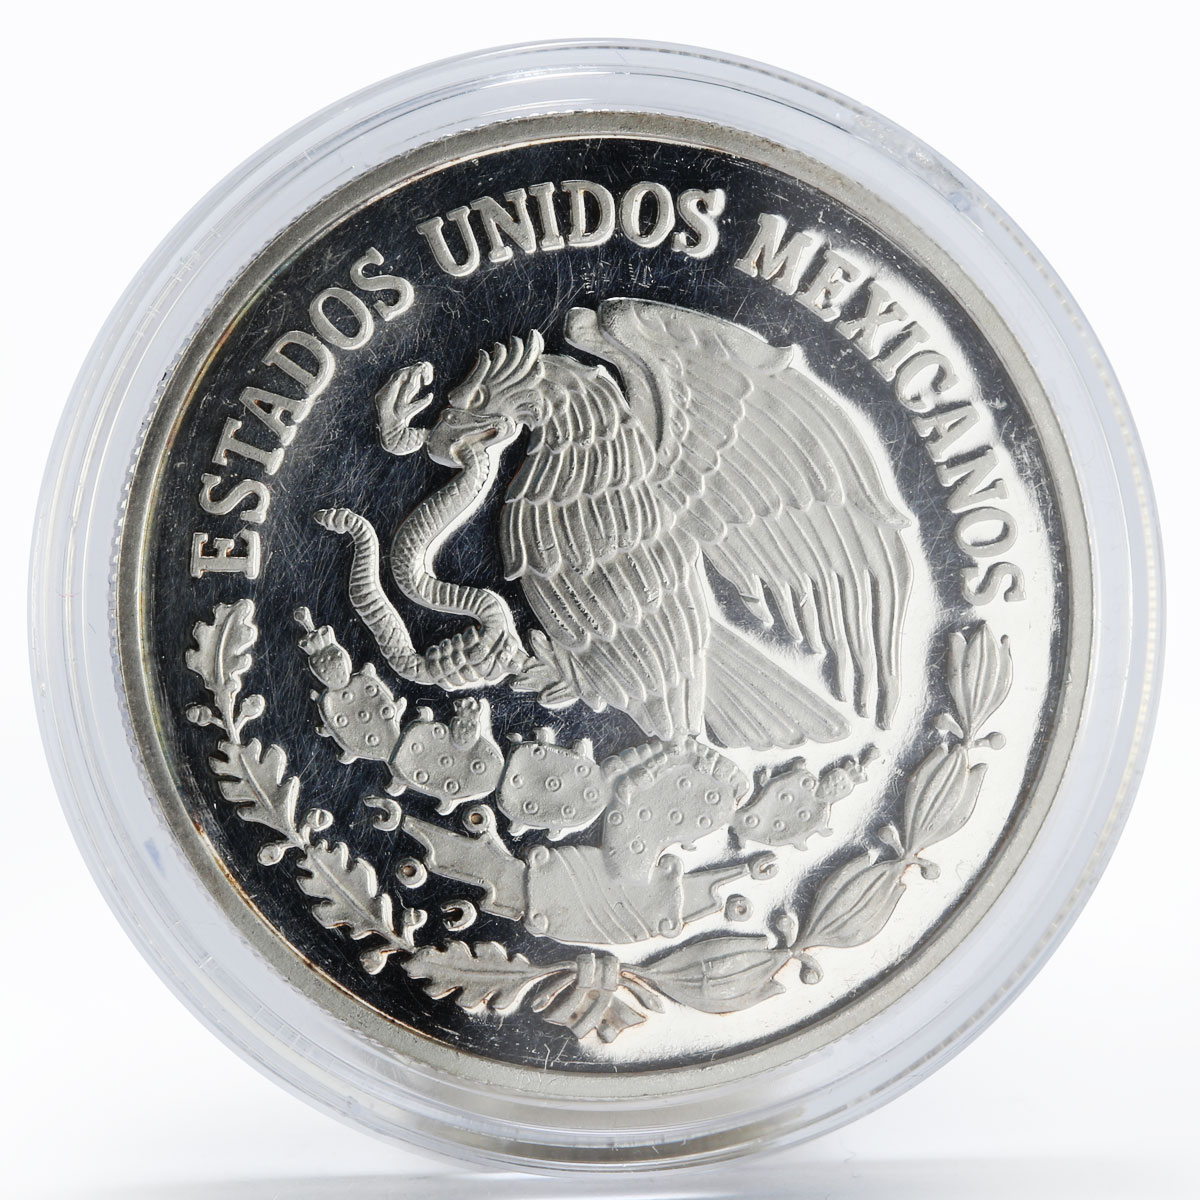 Mexico 10 pesos Michoacan butterflies II edition proof silver coin 2006